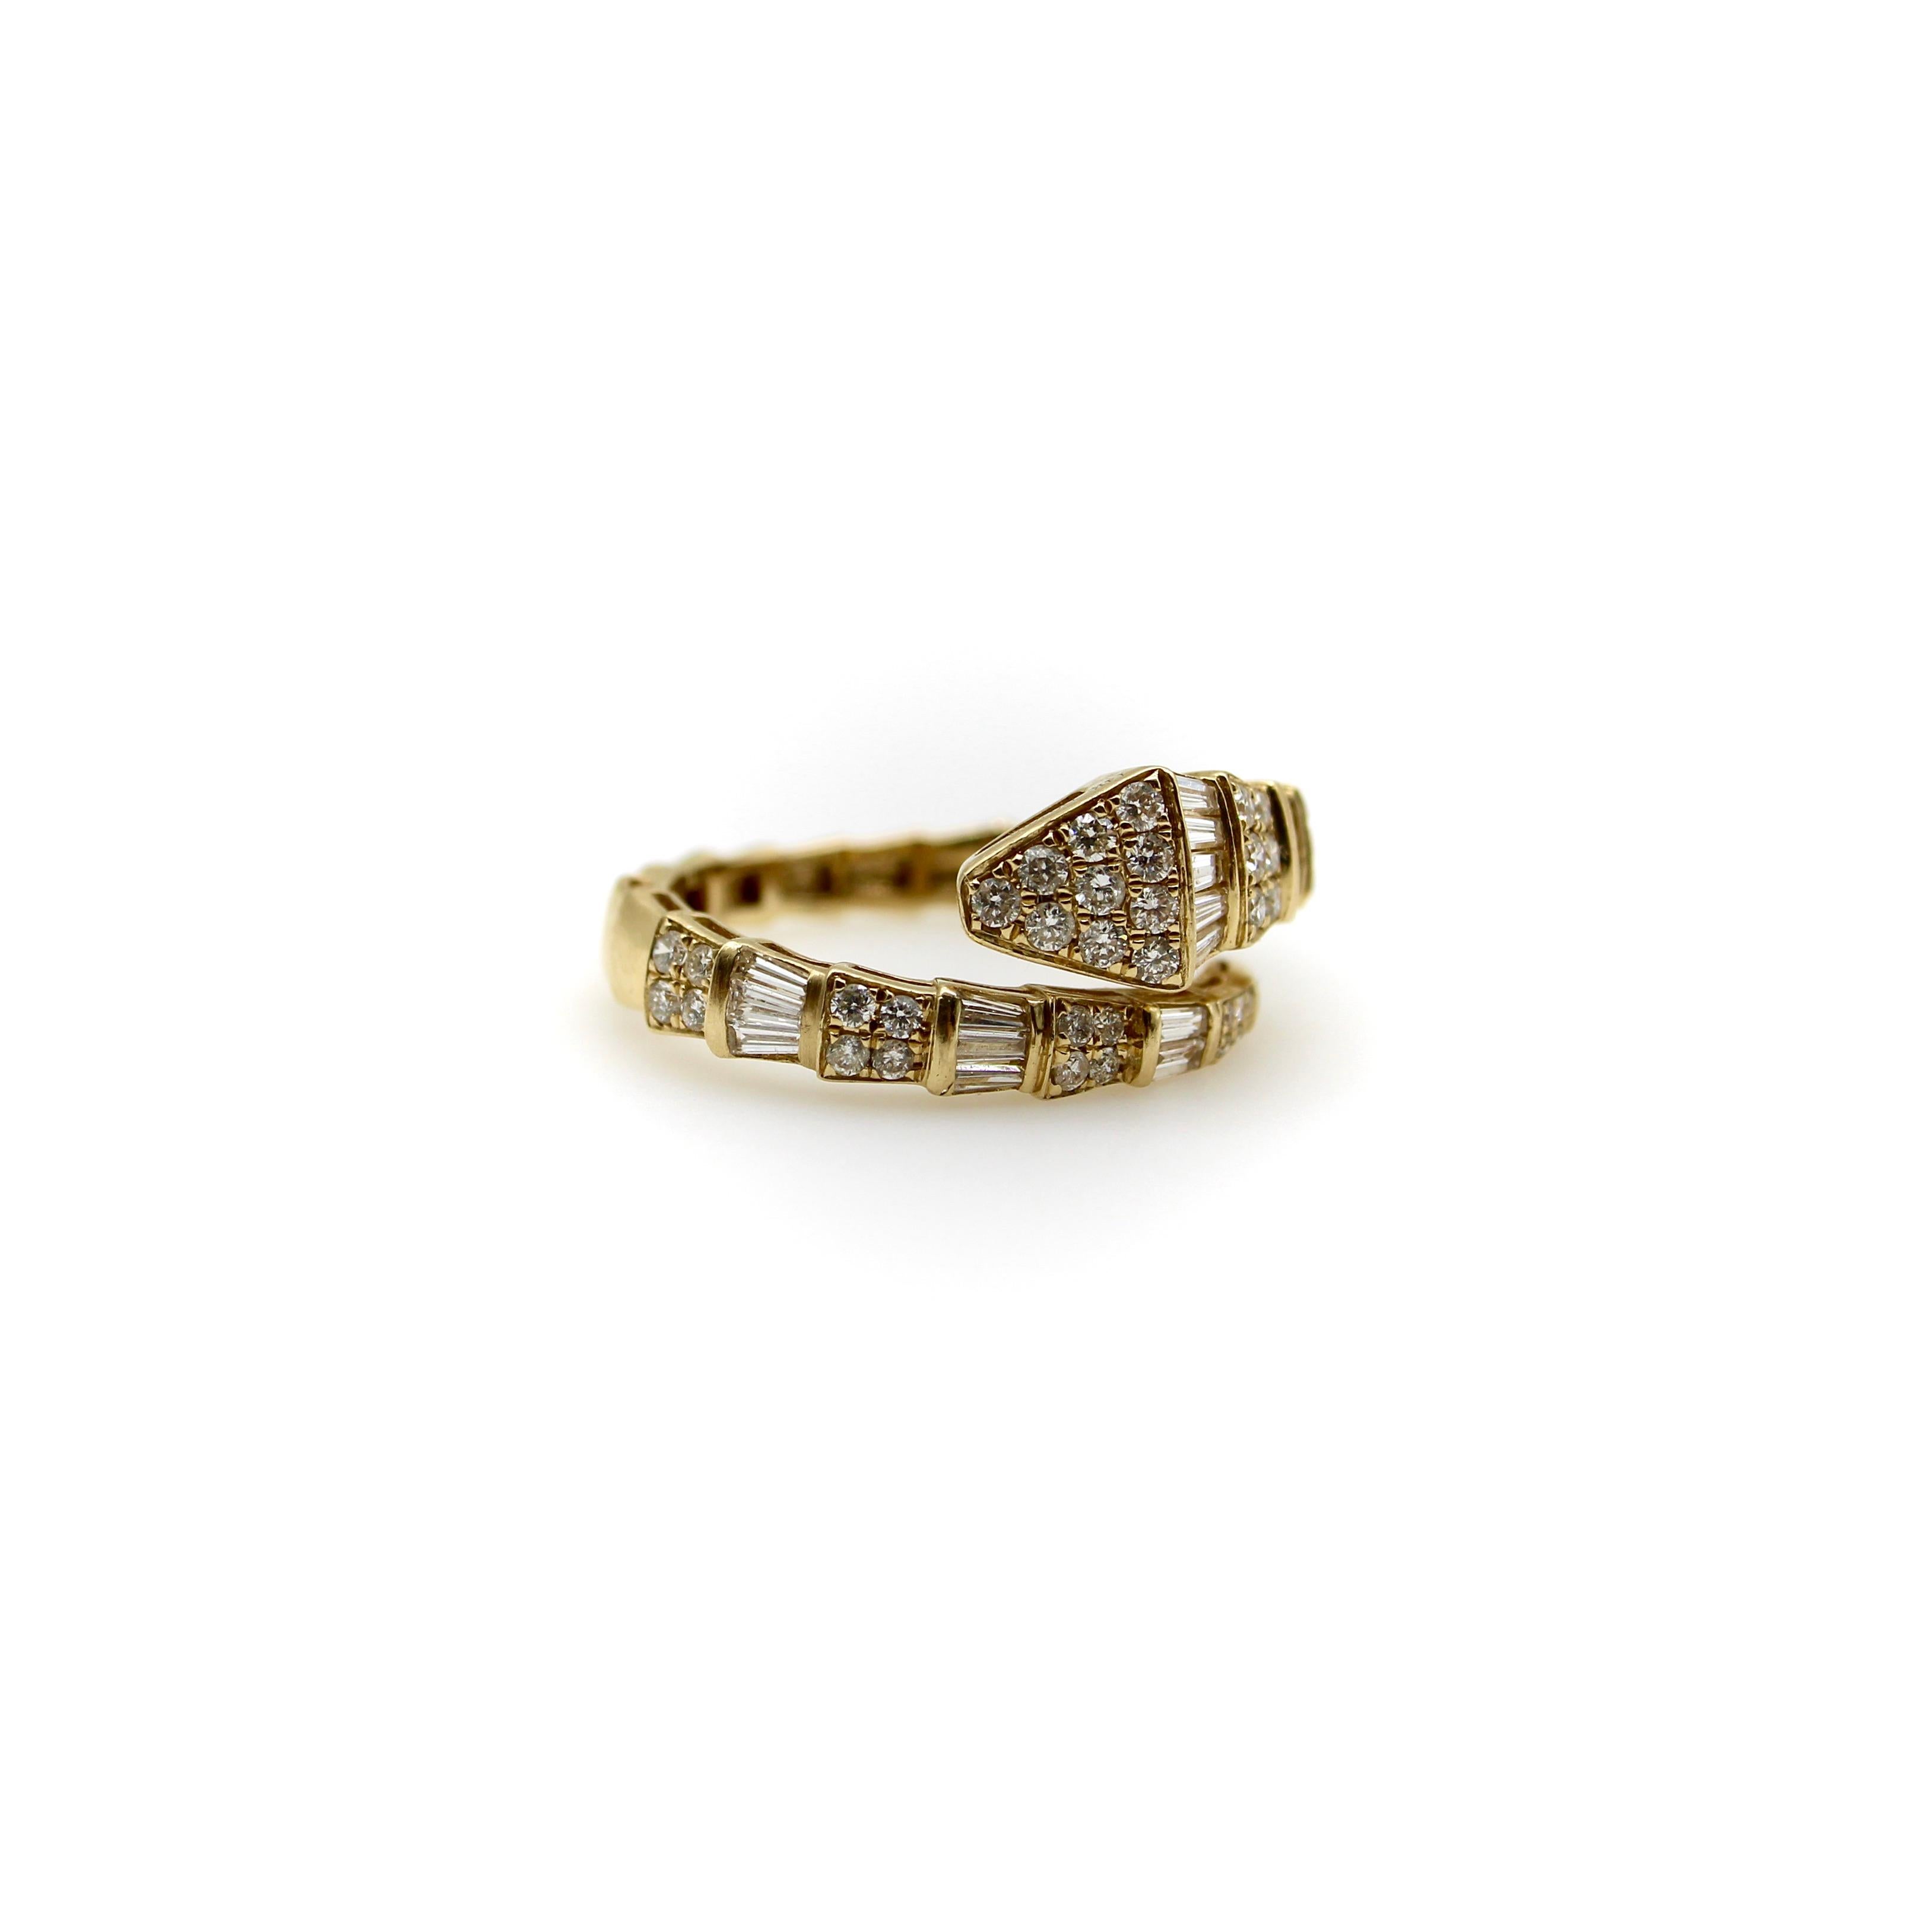  Vintage 14K Gold Diamond Snake Bypass Ring  1